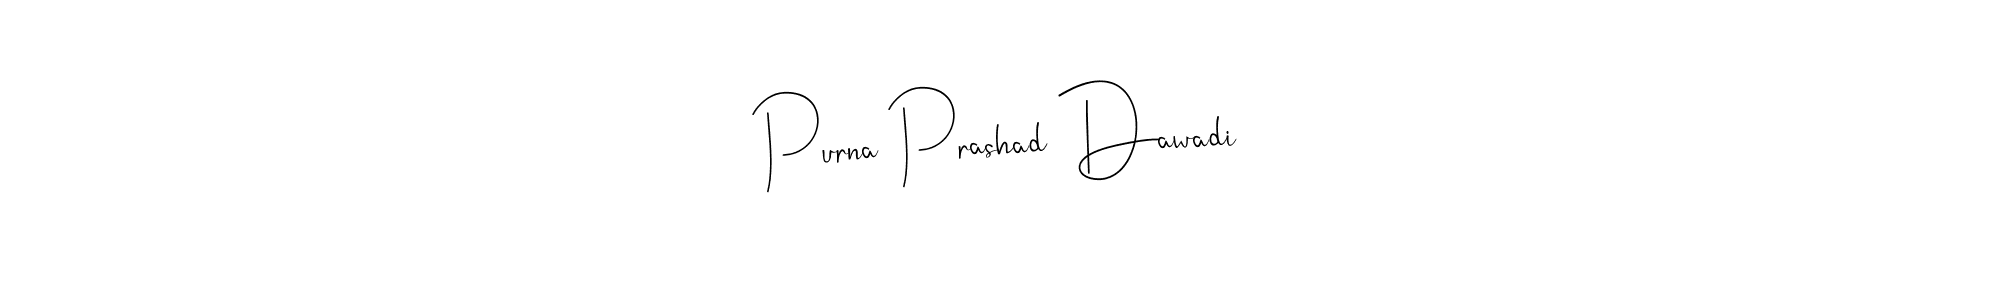 How to Draw Purna Prashad Dawadi signature style? Andilay-7BmLP is a latest design signature styles for name Purna Prashad Dawadi. Purna Prashad Dawadi signature style 4 images and pictures png